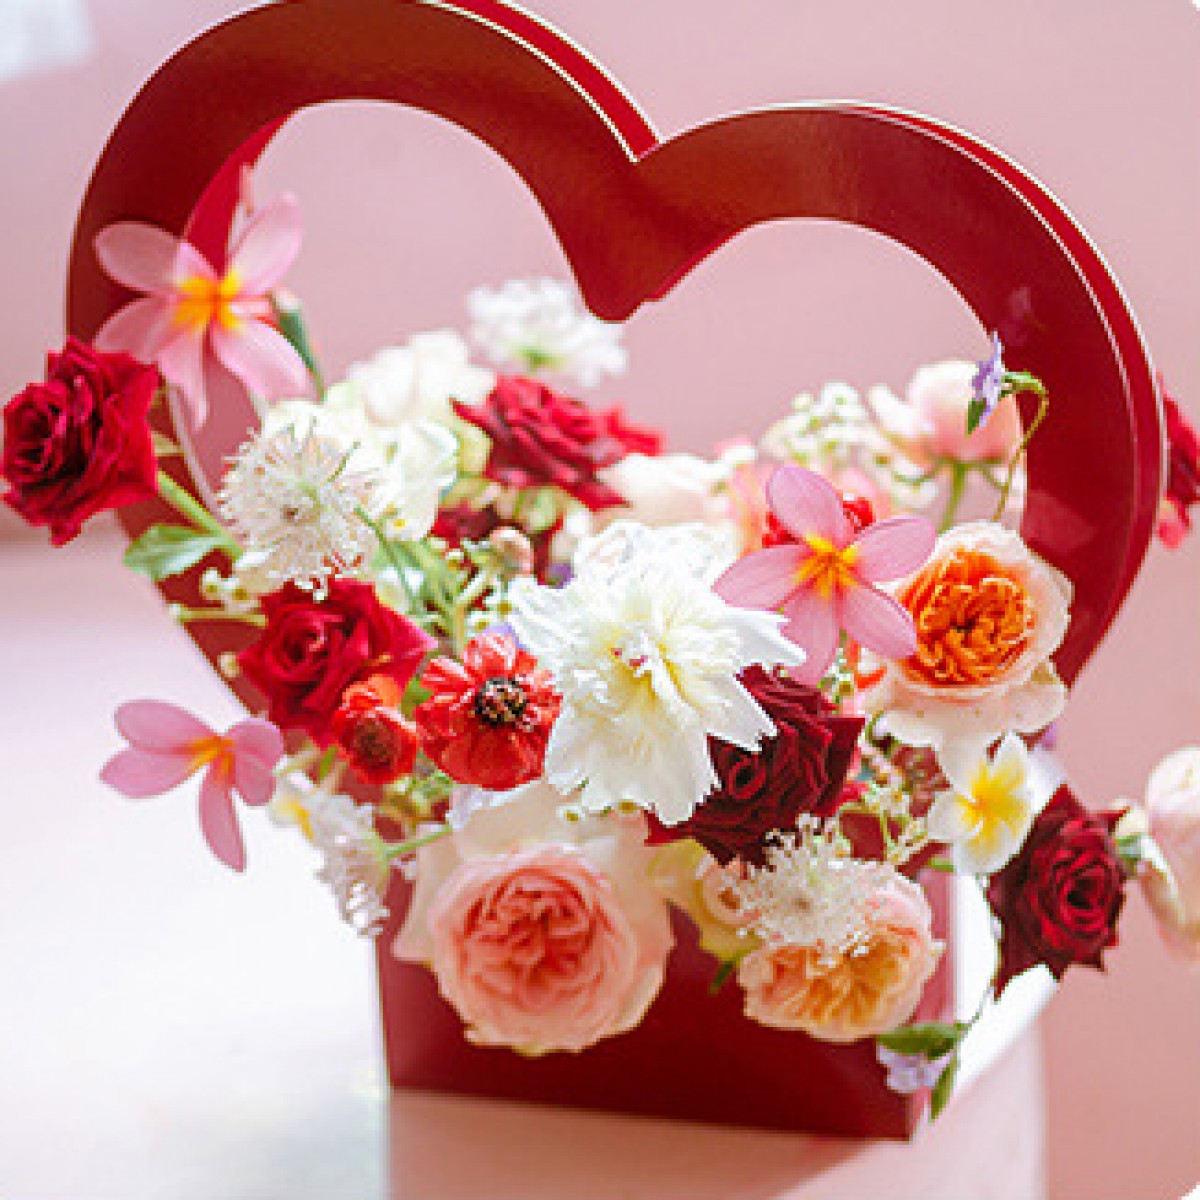 Cute Bouquet of hearts